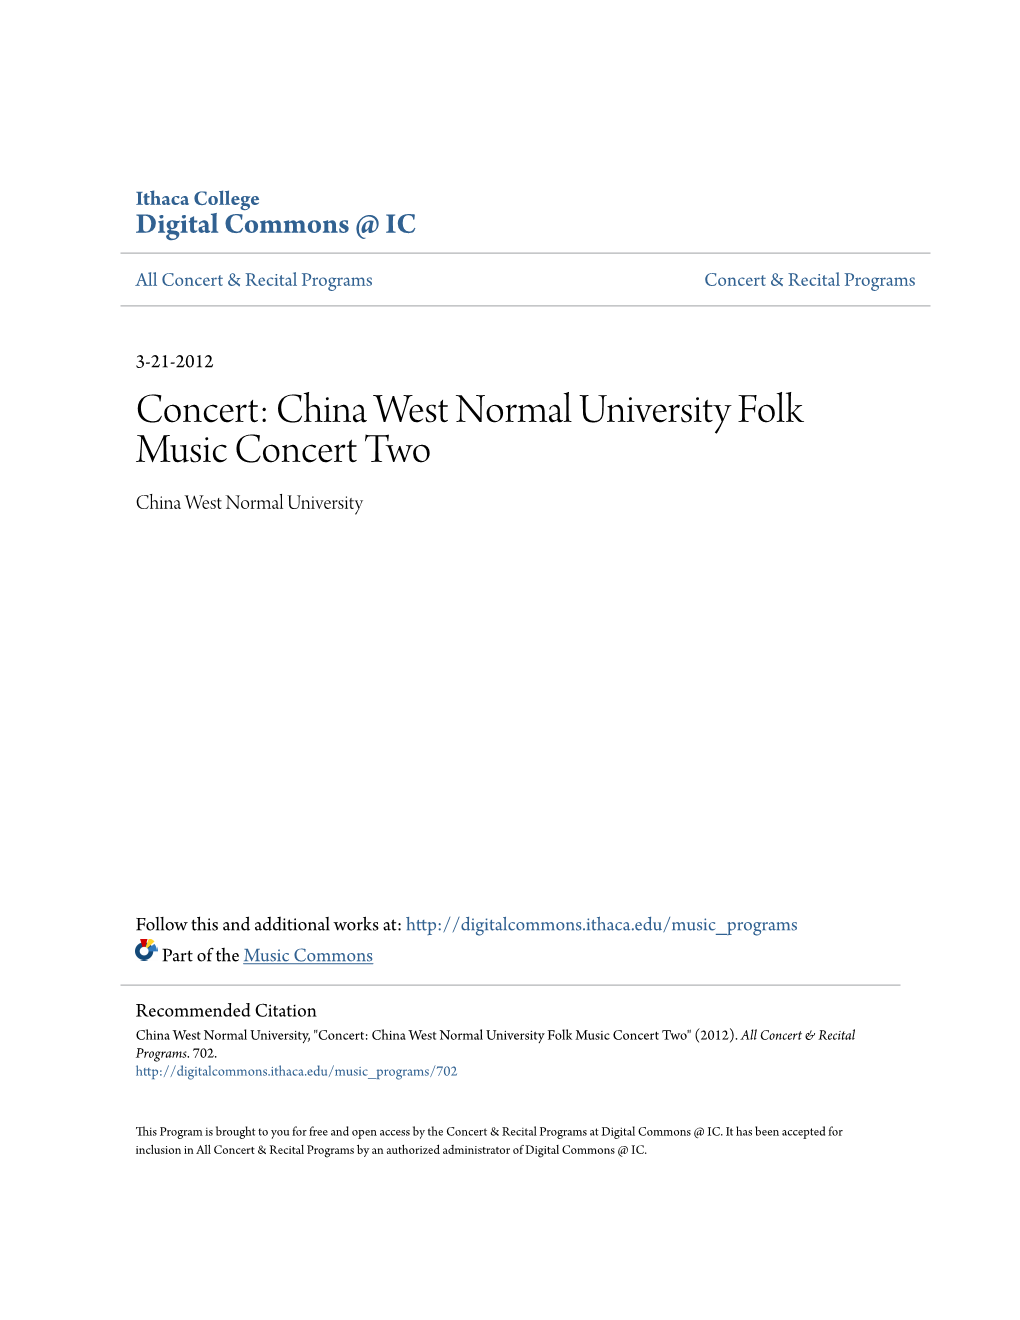 China West Normal University Folk Music Concert Two China West Normal University